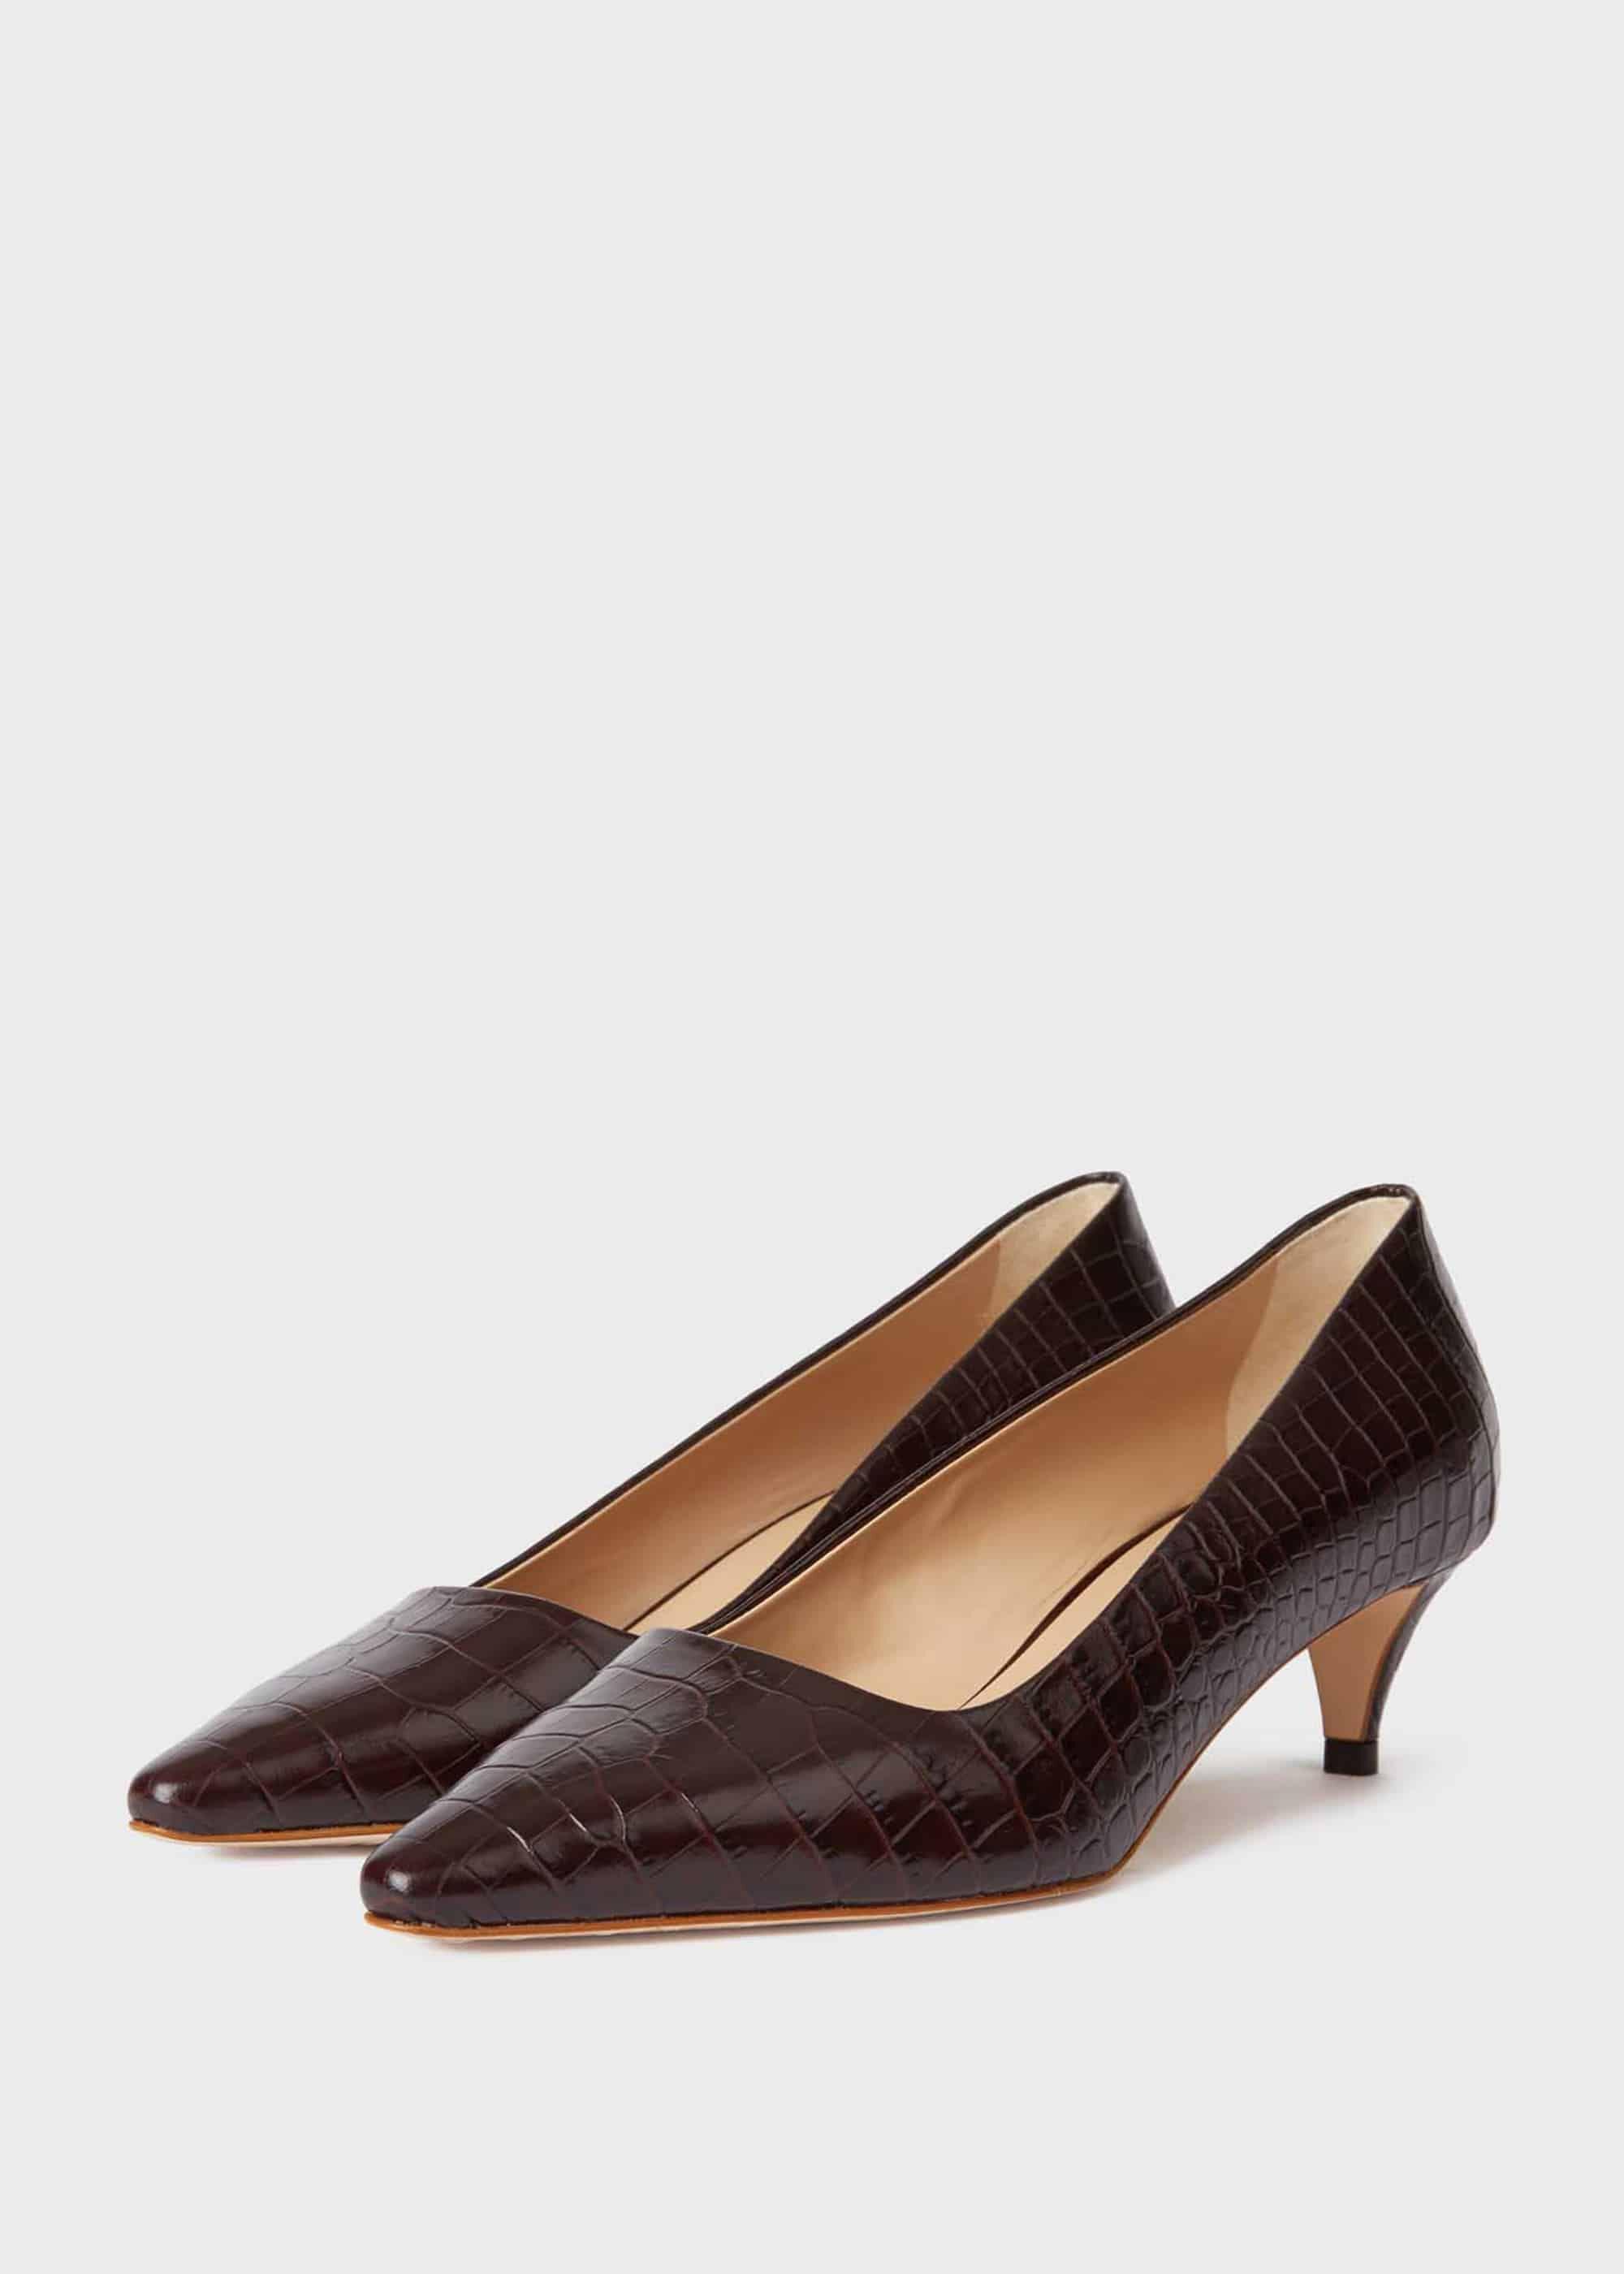 Hobbs Denim Millie Crocodile Kitten Heel Court Shoes in Chocolate (Brown) -  Lyst